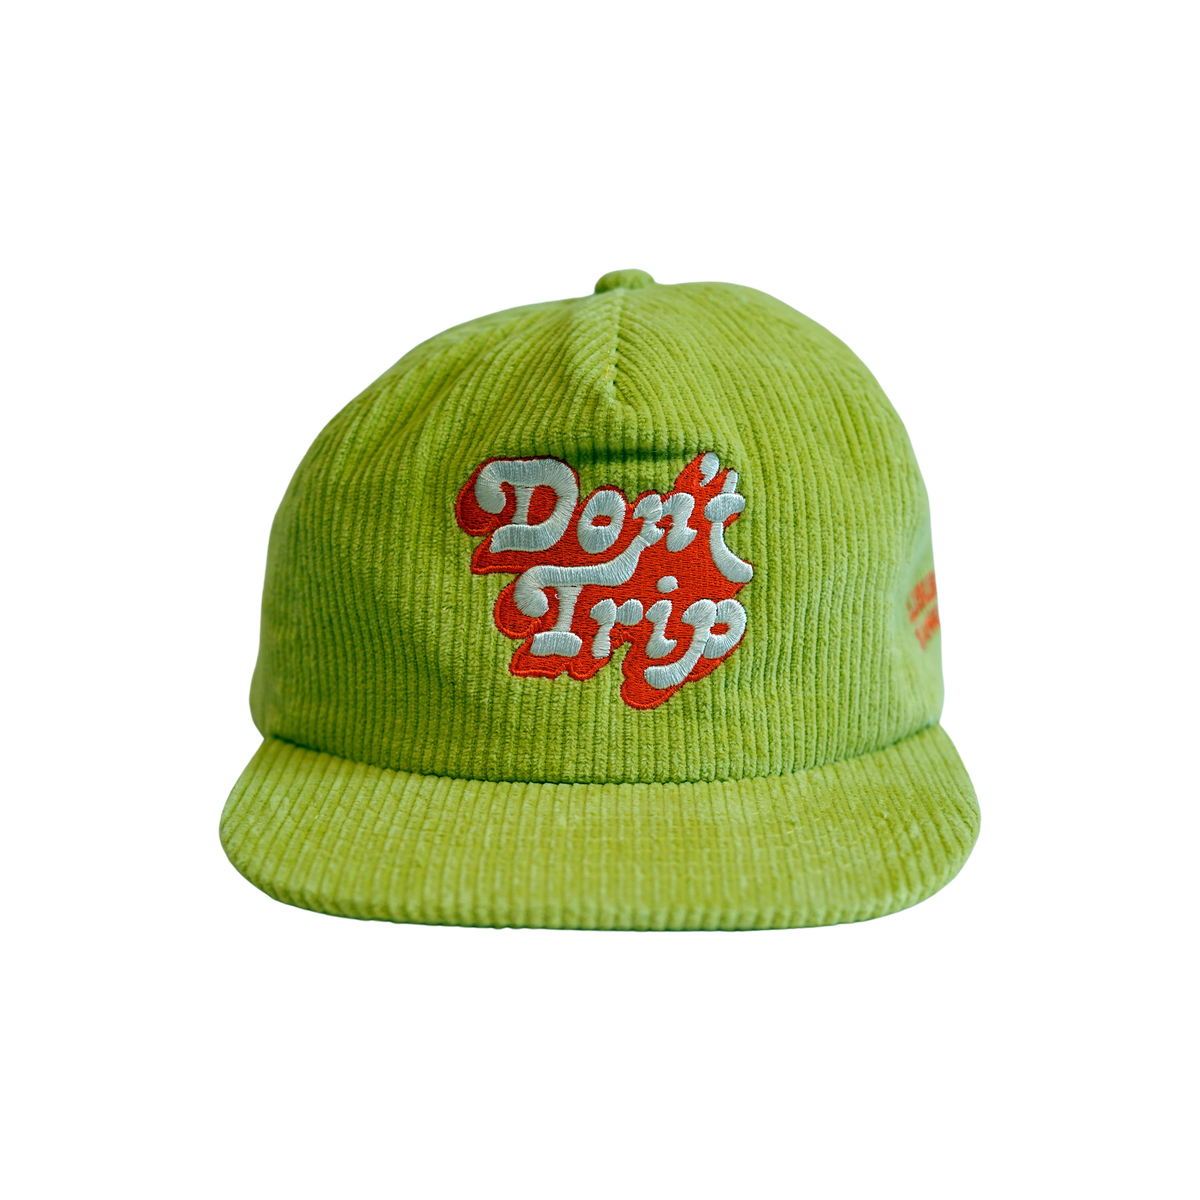 x Free & Easy Don't Trip snapback hat